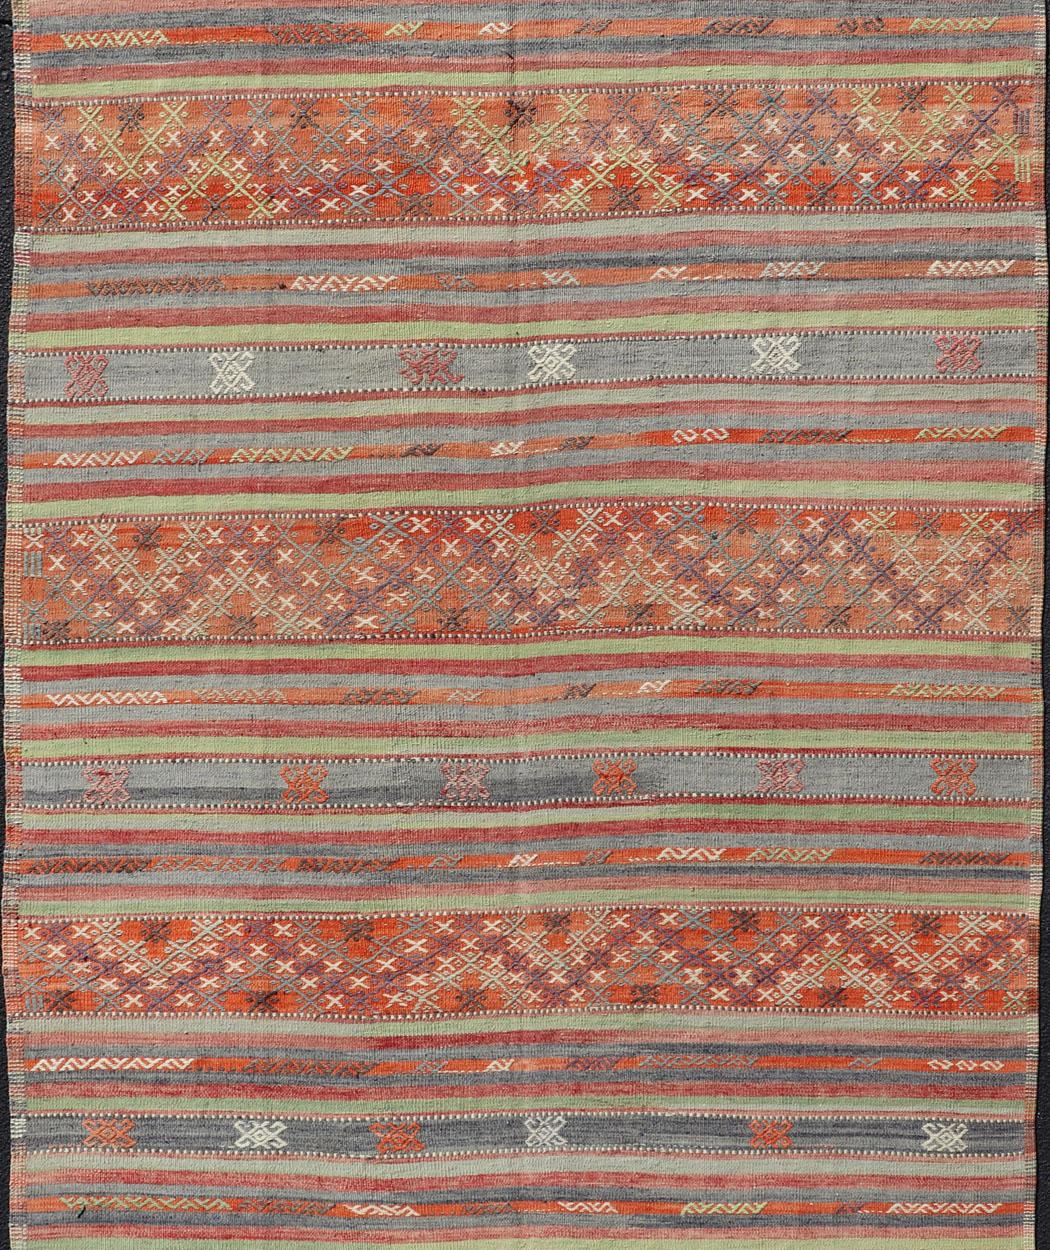 Hand-Woven Multicolored Vintage Turkish Large Kilim Rug with Stripes Design